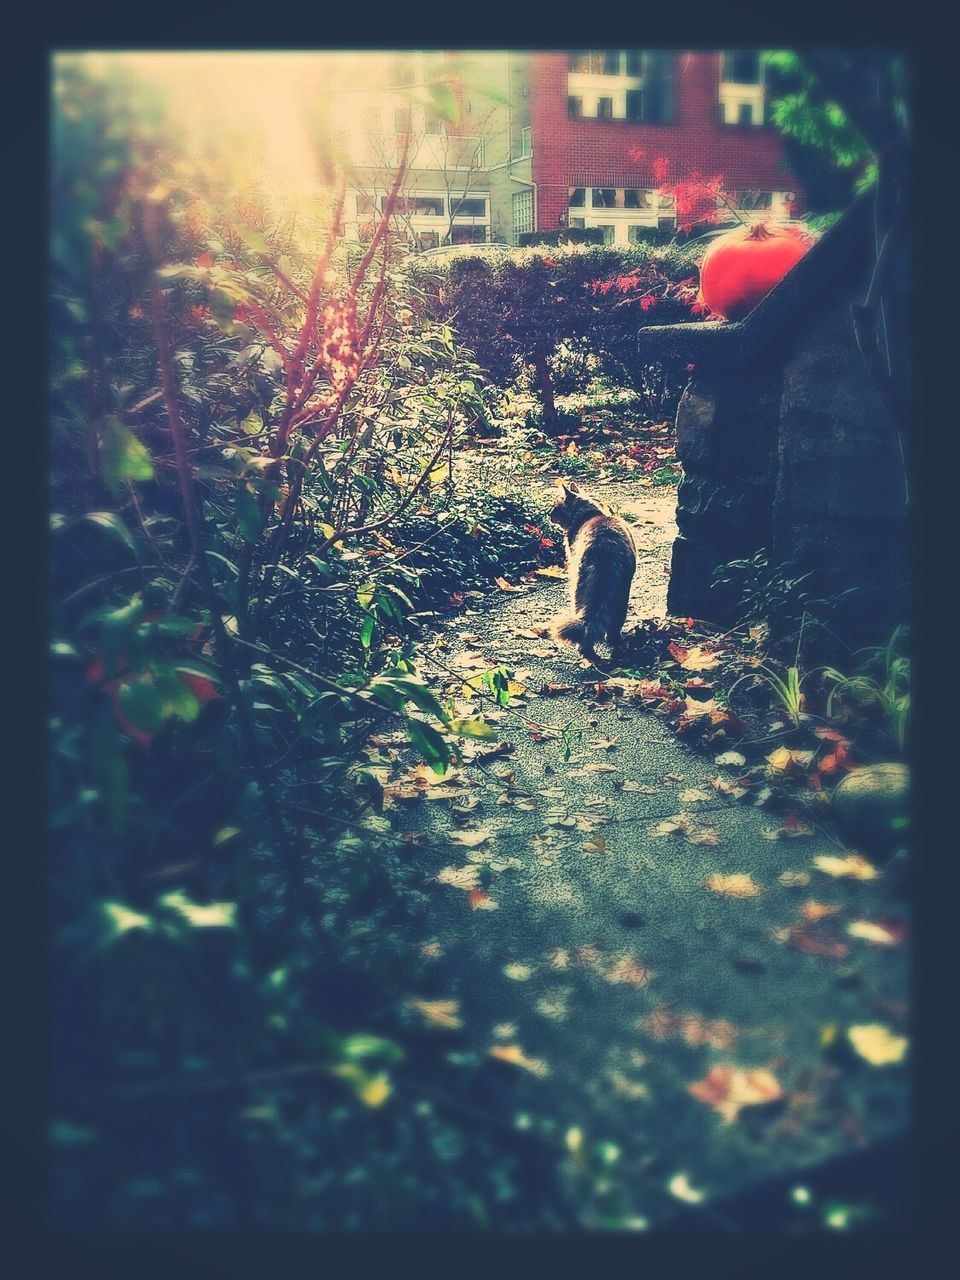 Cat on pavement